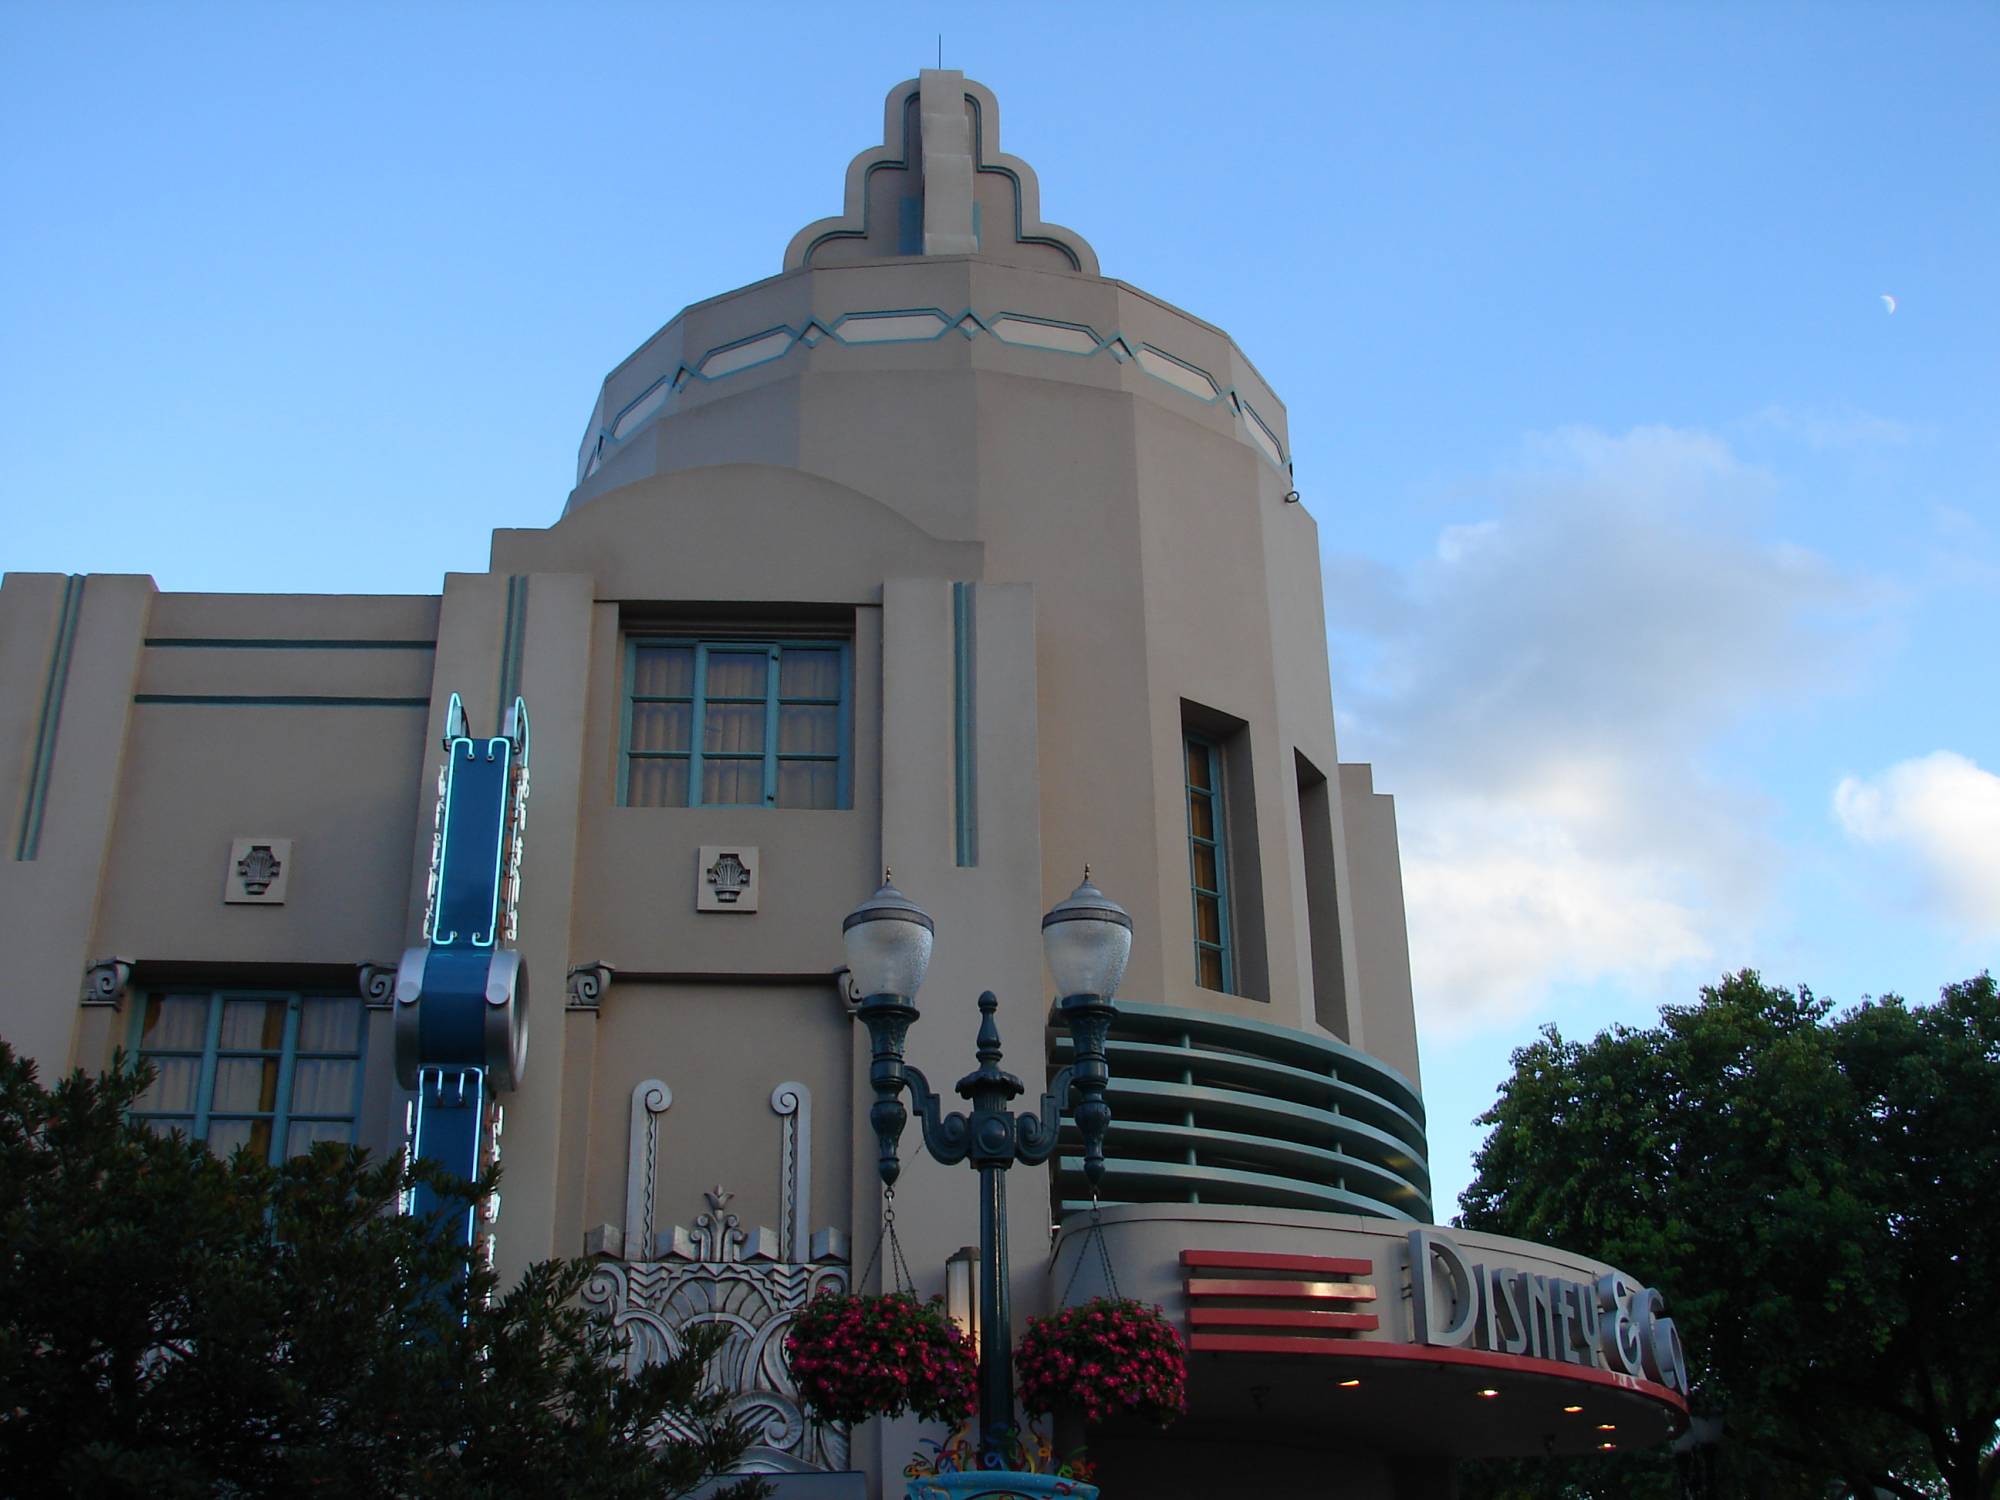 Disney's Hollywood Studios - Hollywood Blvd